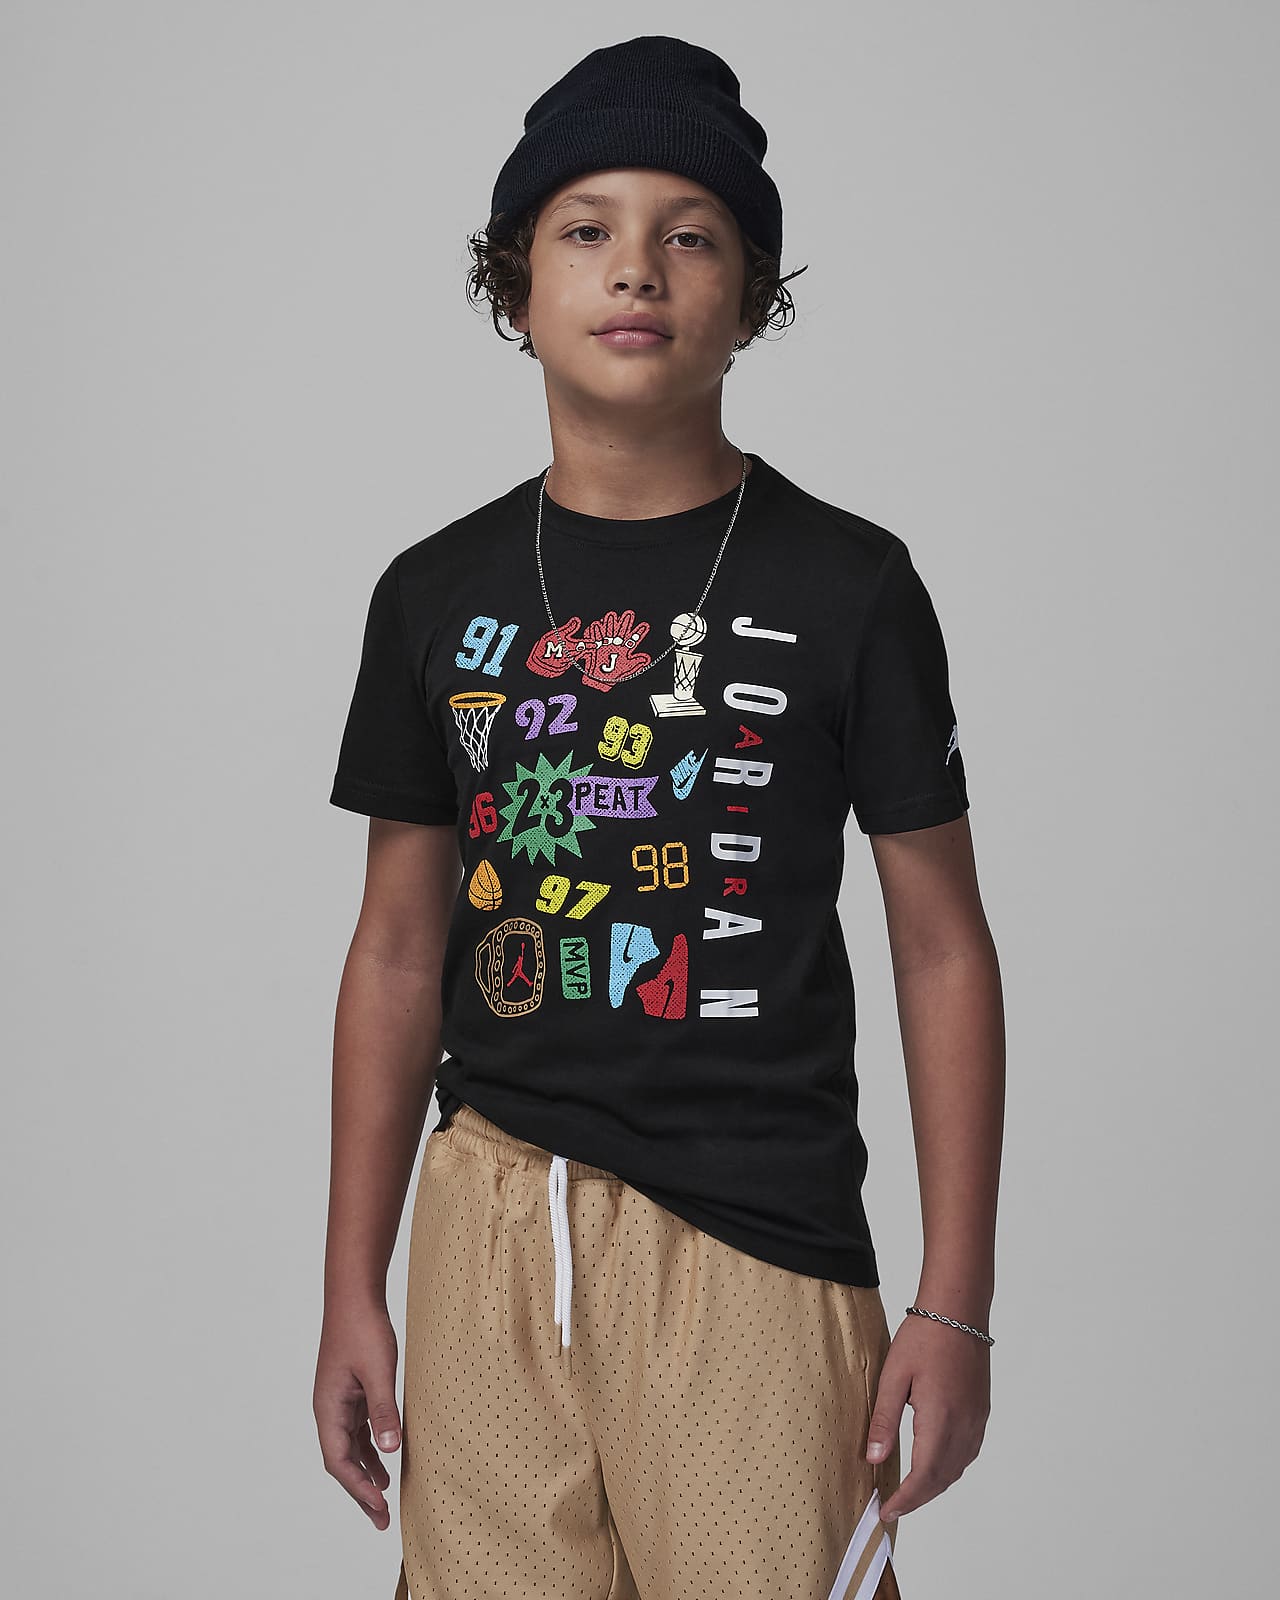 Jordan 2x3 Peat Tee Camiseta - Niño/a